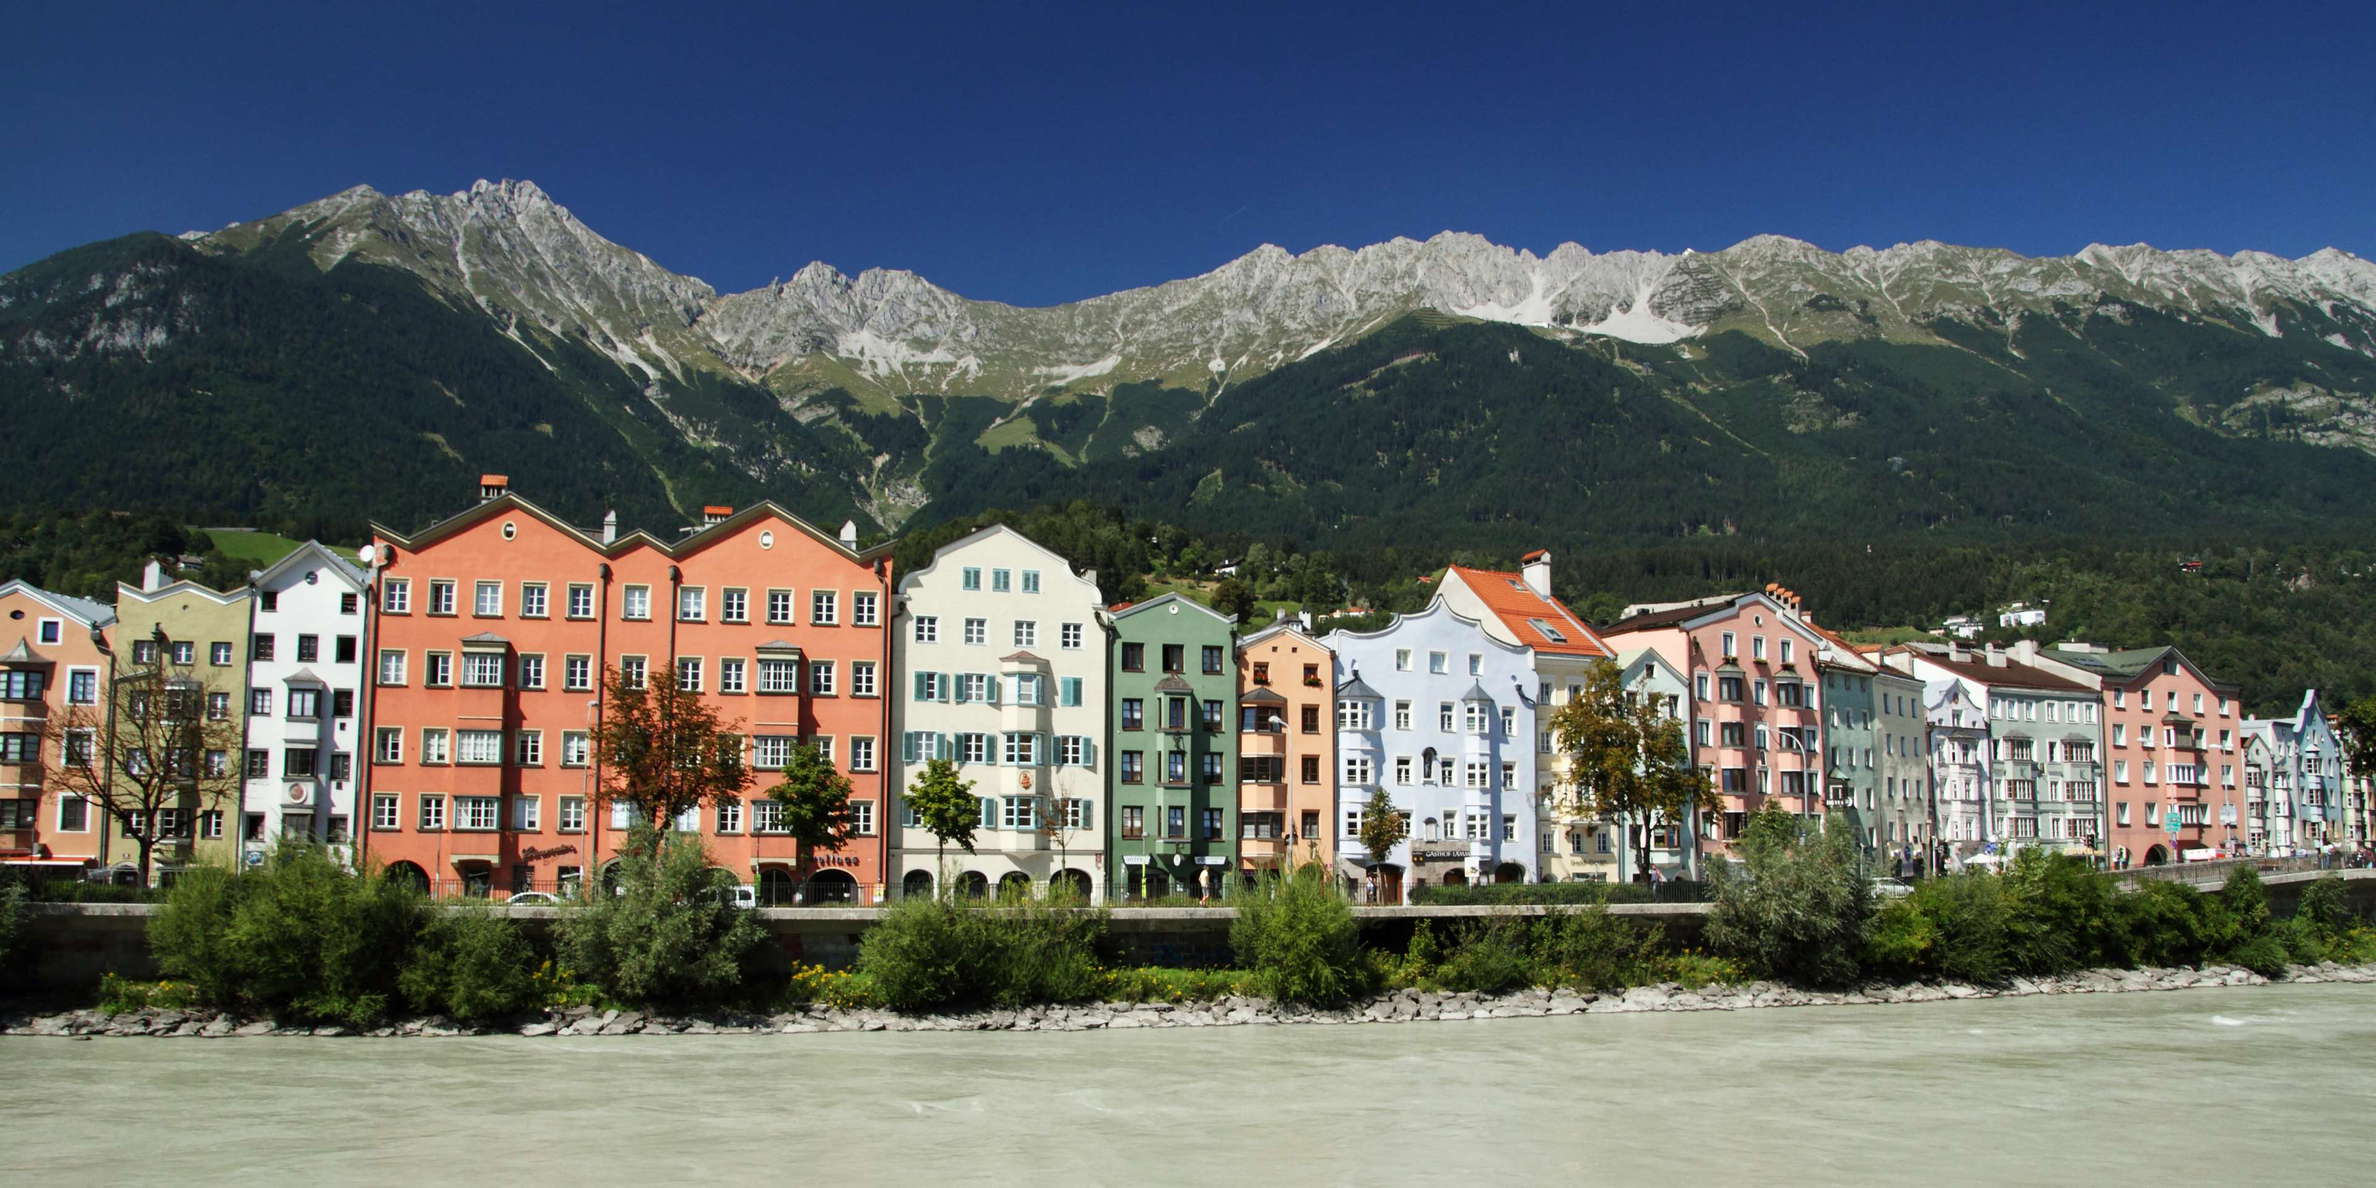 Innsbruck | Hötting with Karwendel Mountains